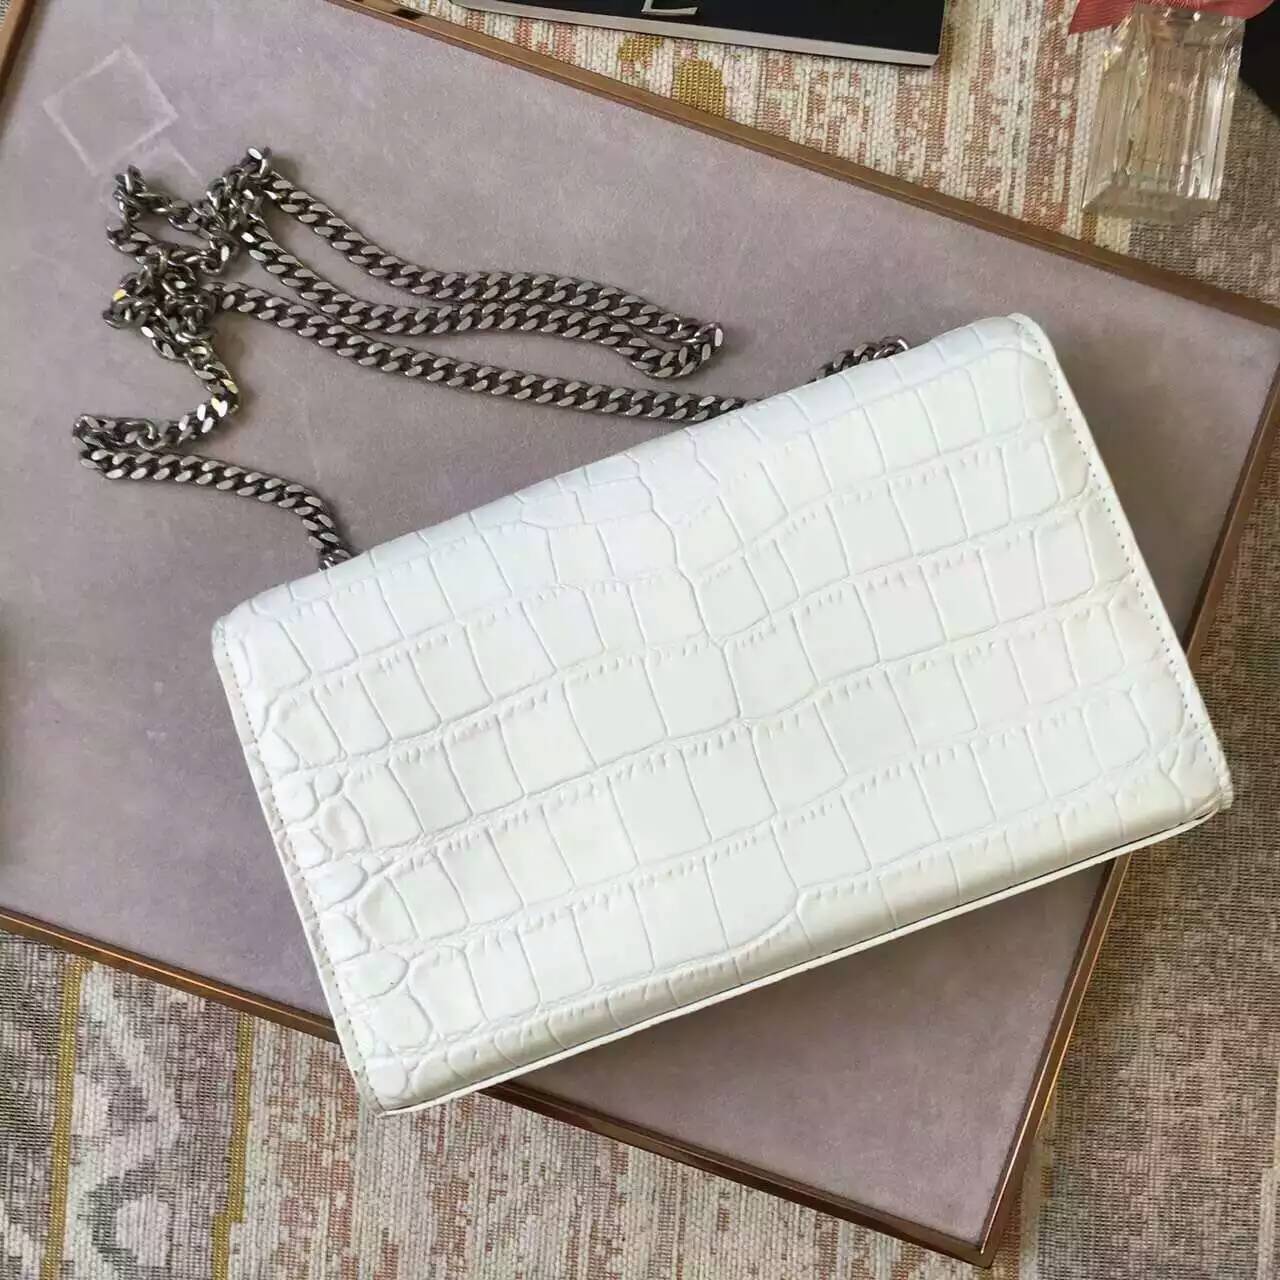 S/S 2016 New Saint Laurent Bag Cheap Sale-Saint Laurent Medium Monogram Satchel in Dove White Crocodile Embossed Leather - Click Image to Close